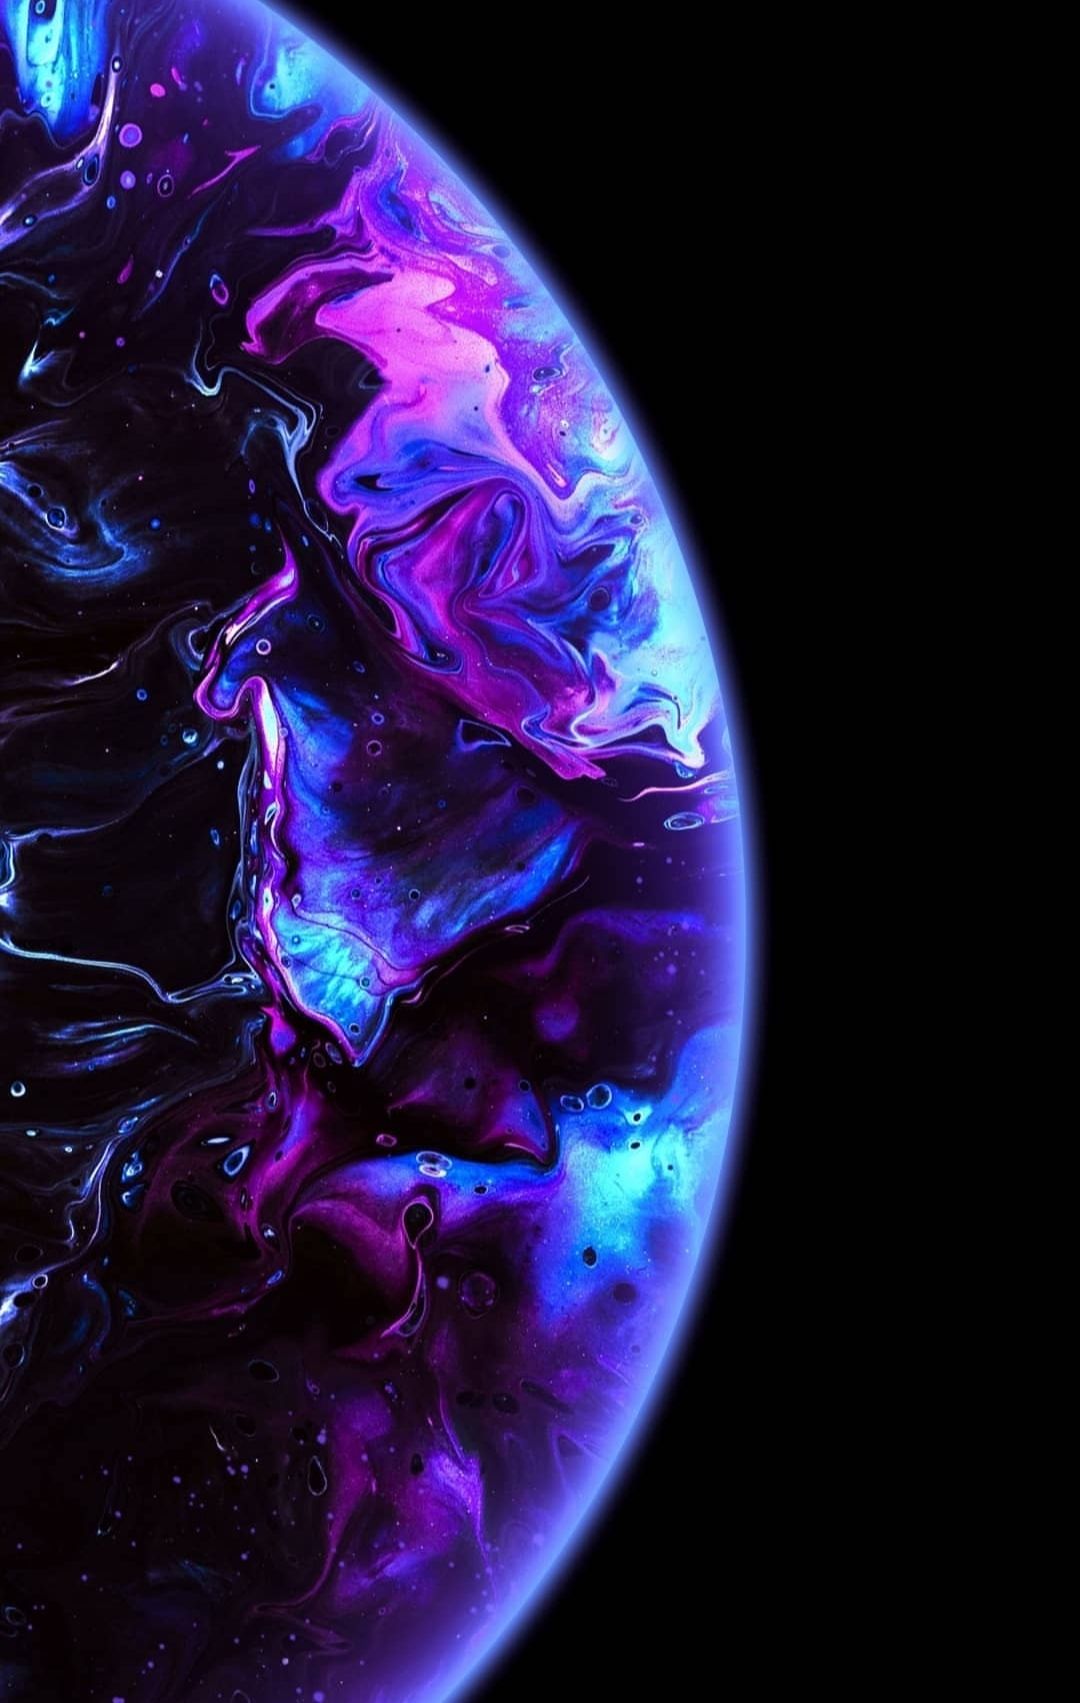 Earth on NEON Wallpaper. Wallpaper iphone neon, Neon wallpaper, iPhone wallpaper planets